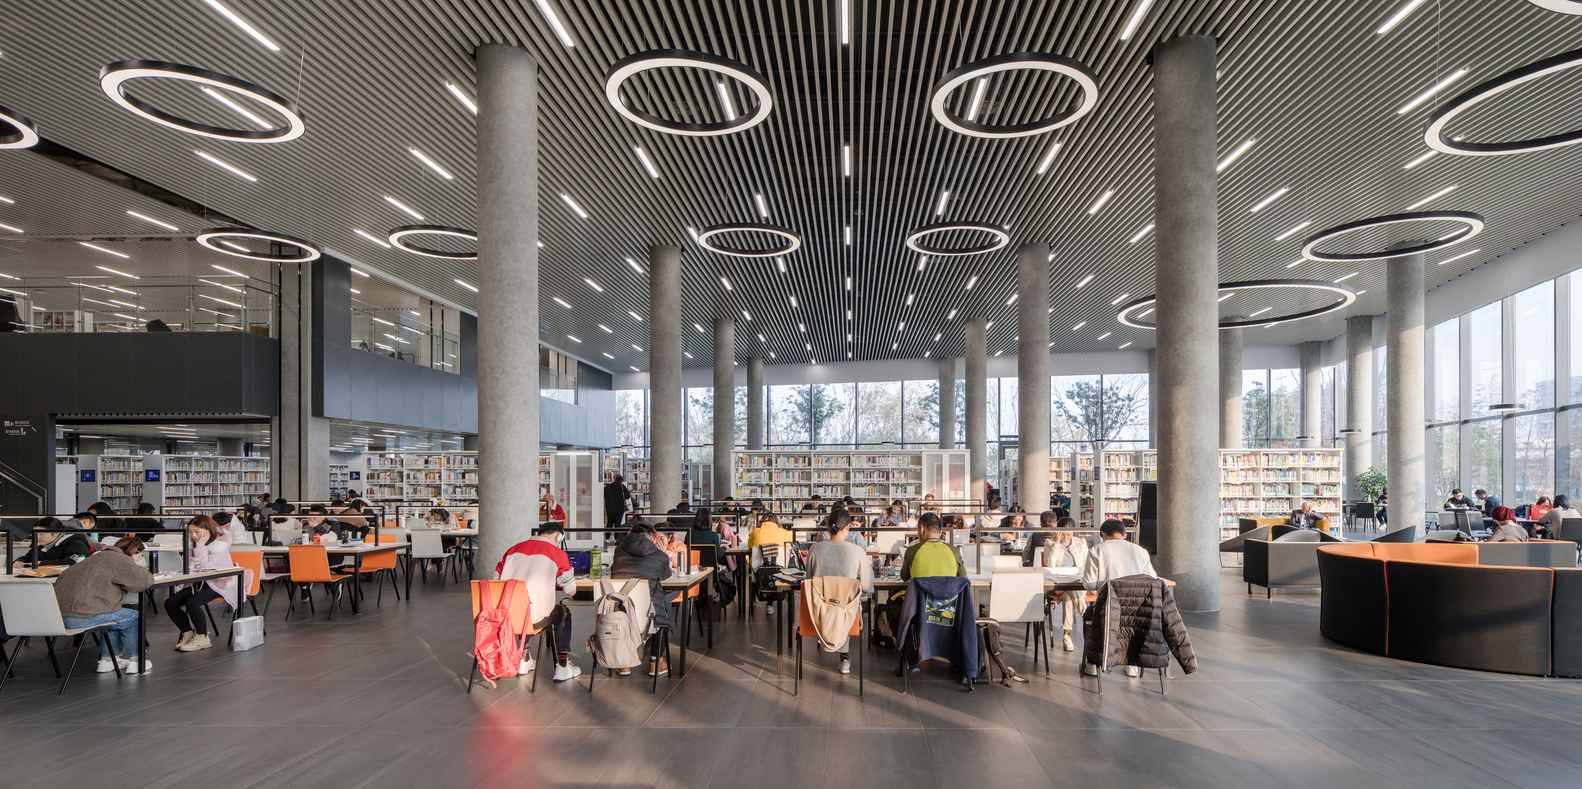 Desain perpustakaan di dunia paling modern yang mengikuti perkembangan zaman. Dibangun dengan konsep yang unik hingga paling megah._1.2